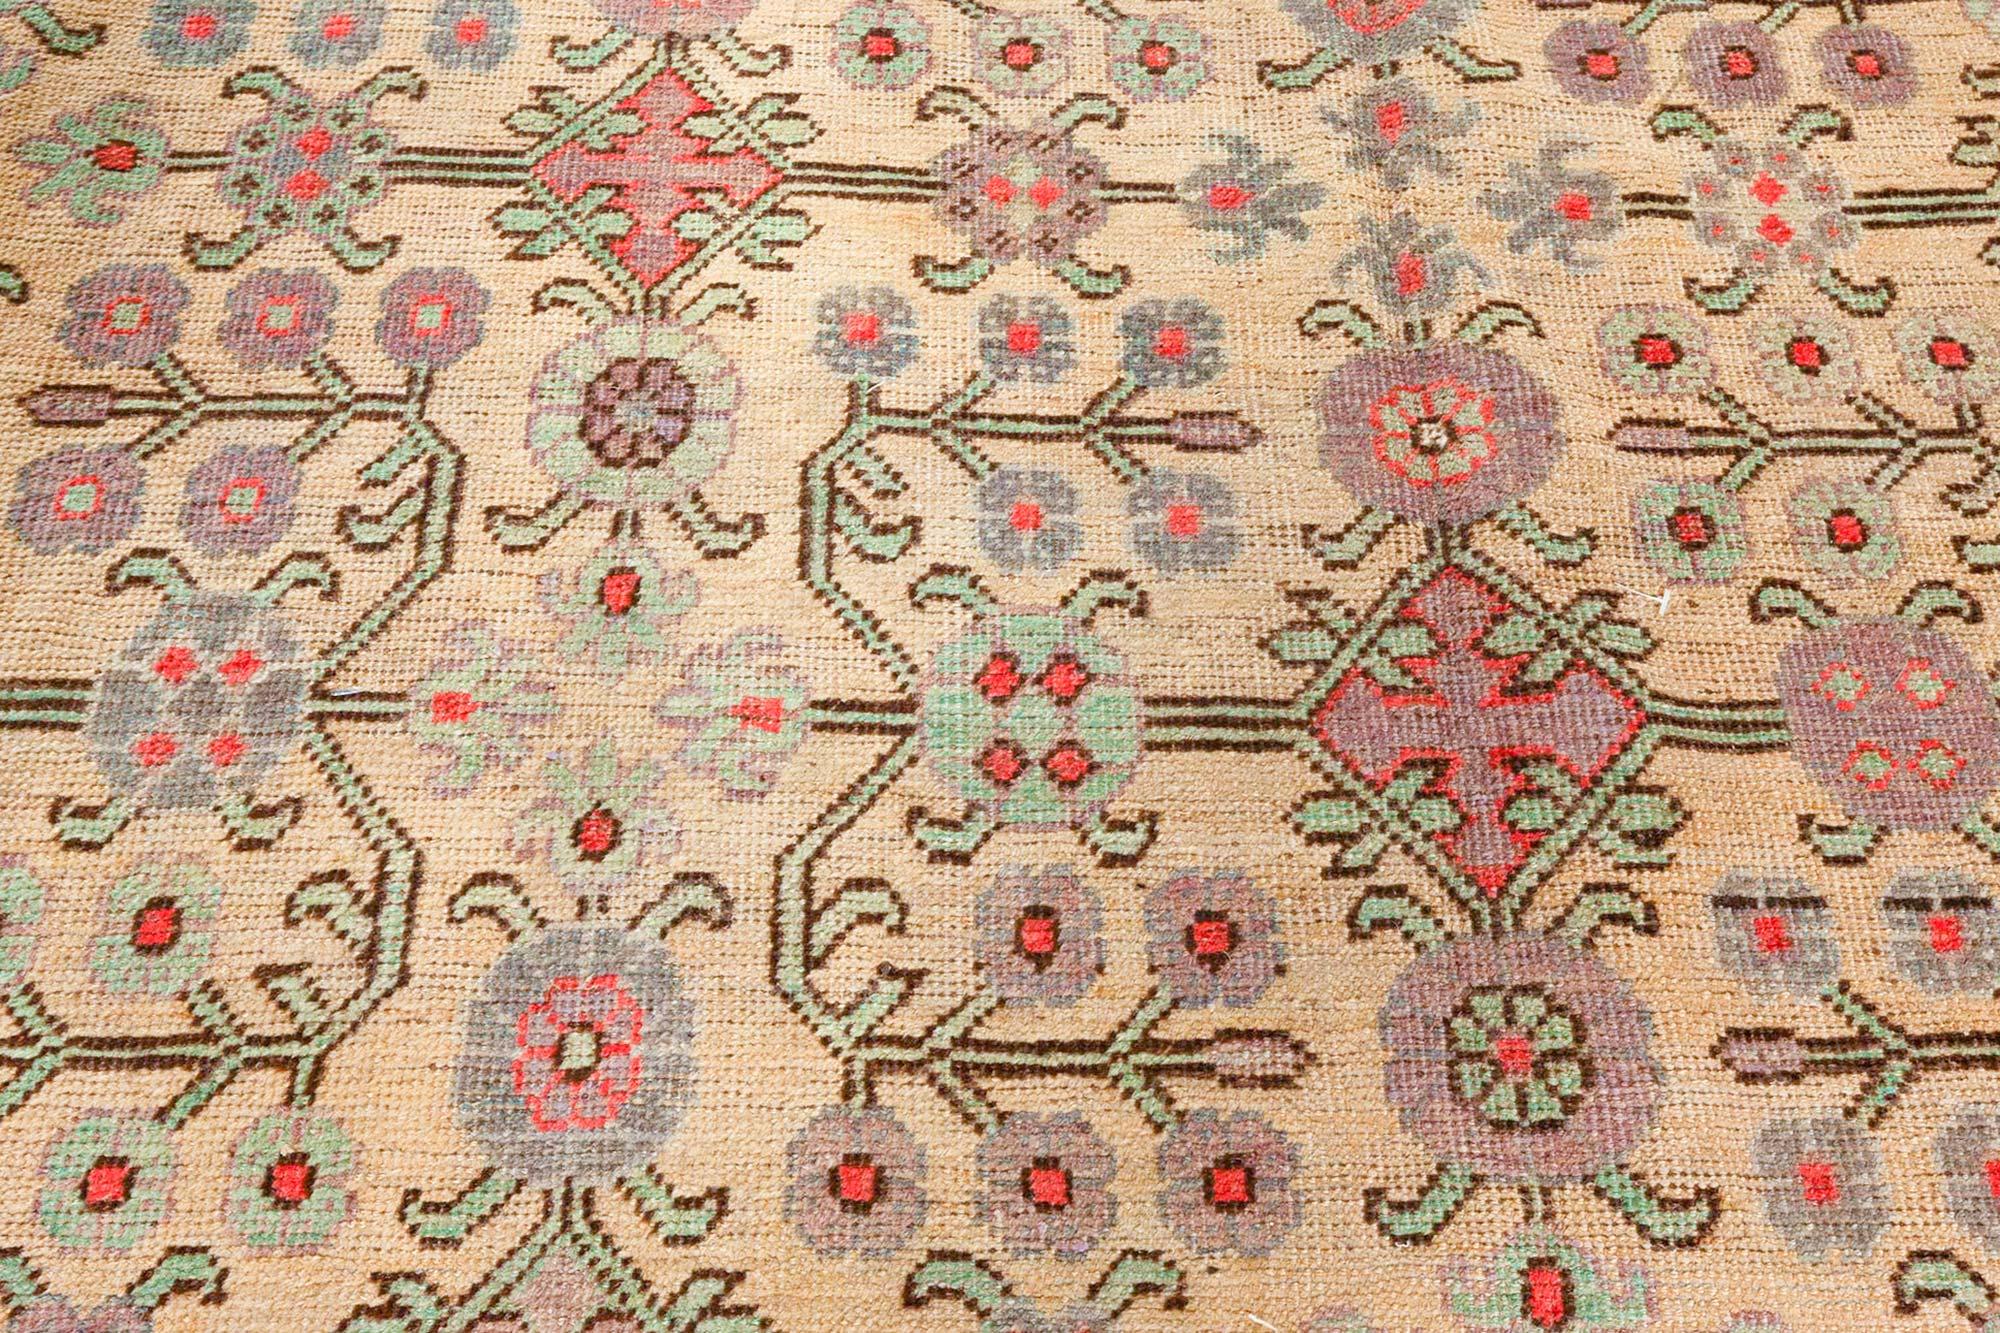 High-quality Vintage Samarkand 'Khotan' handmade wool rug.
Size: 6'10